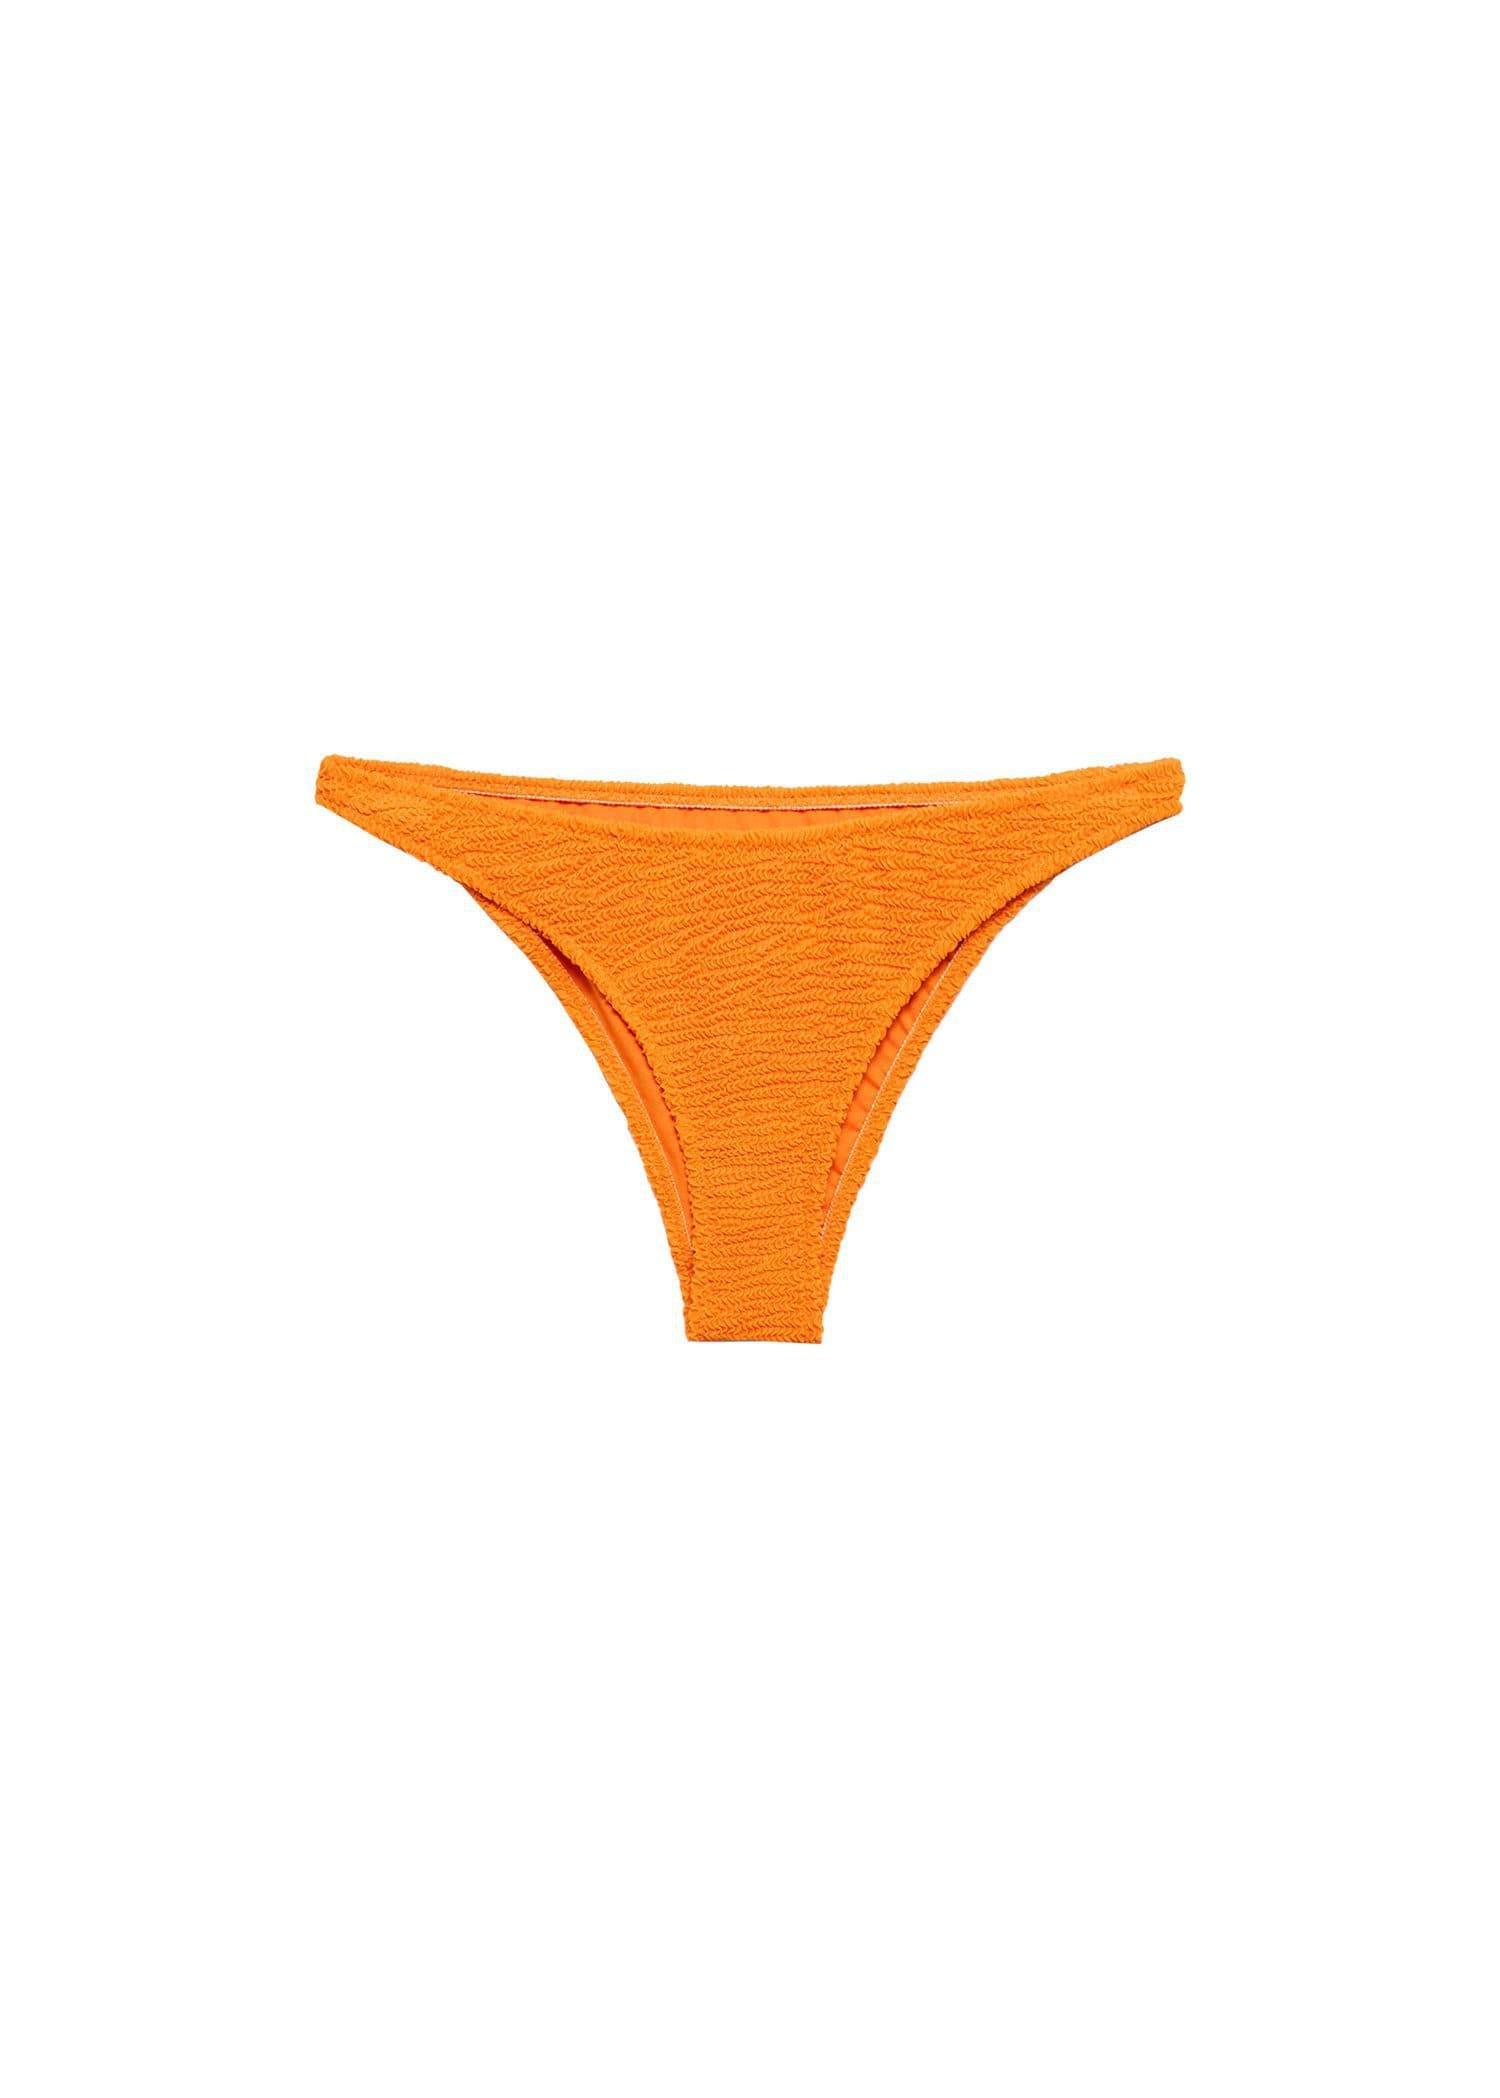 Mango - Orange Textured Bikini Bottom